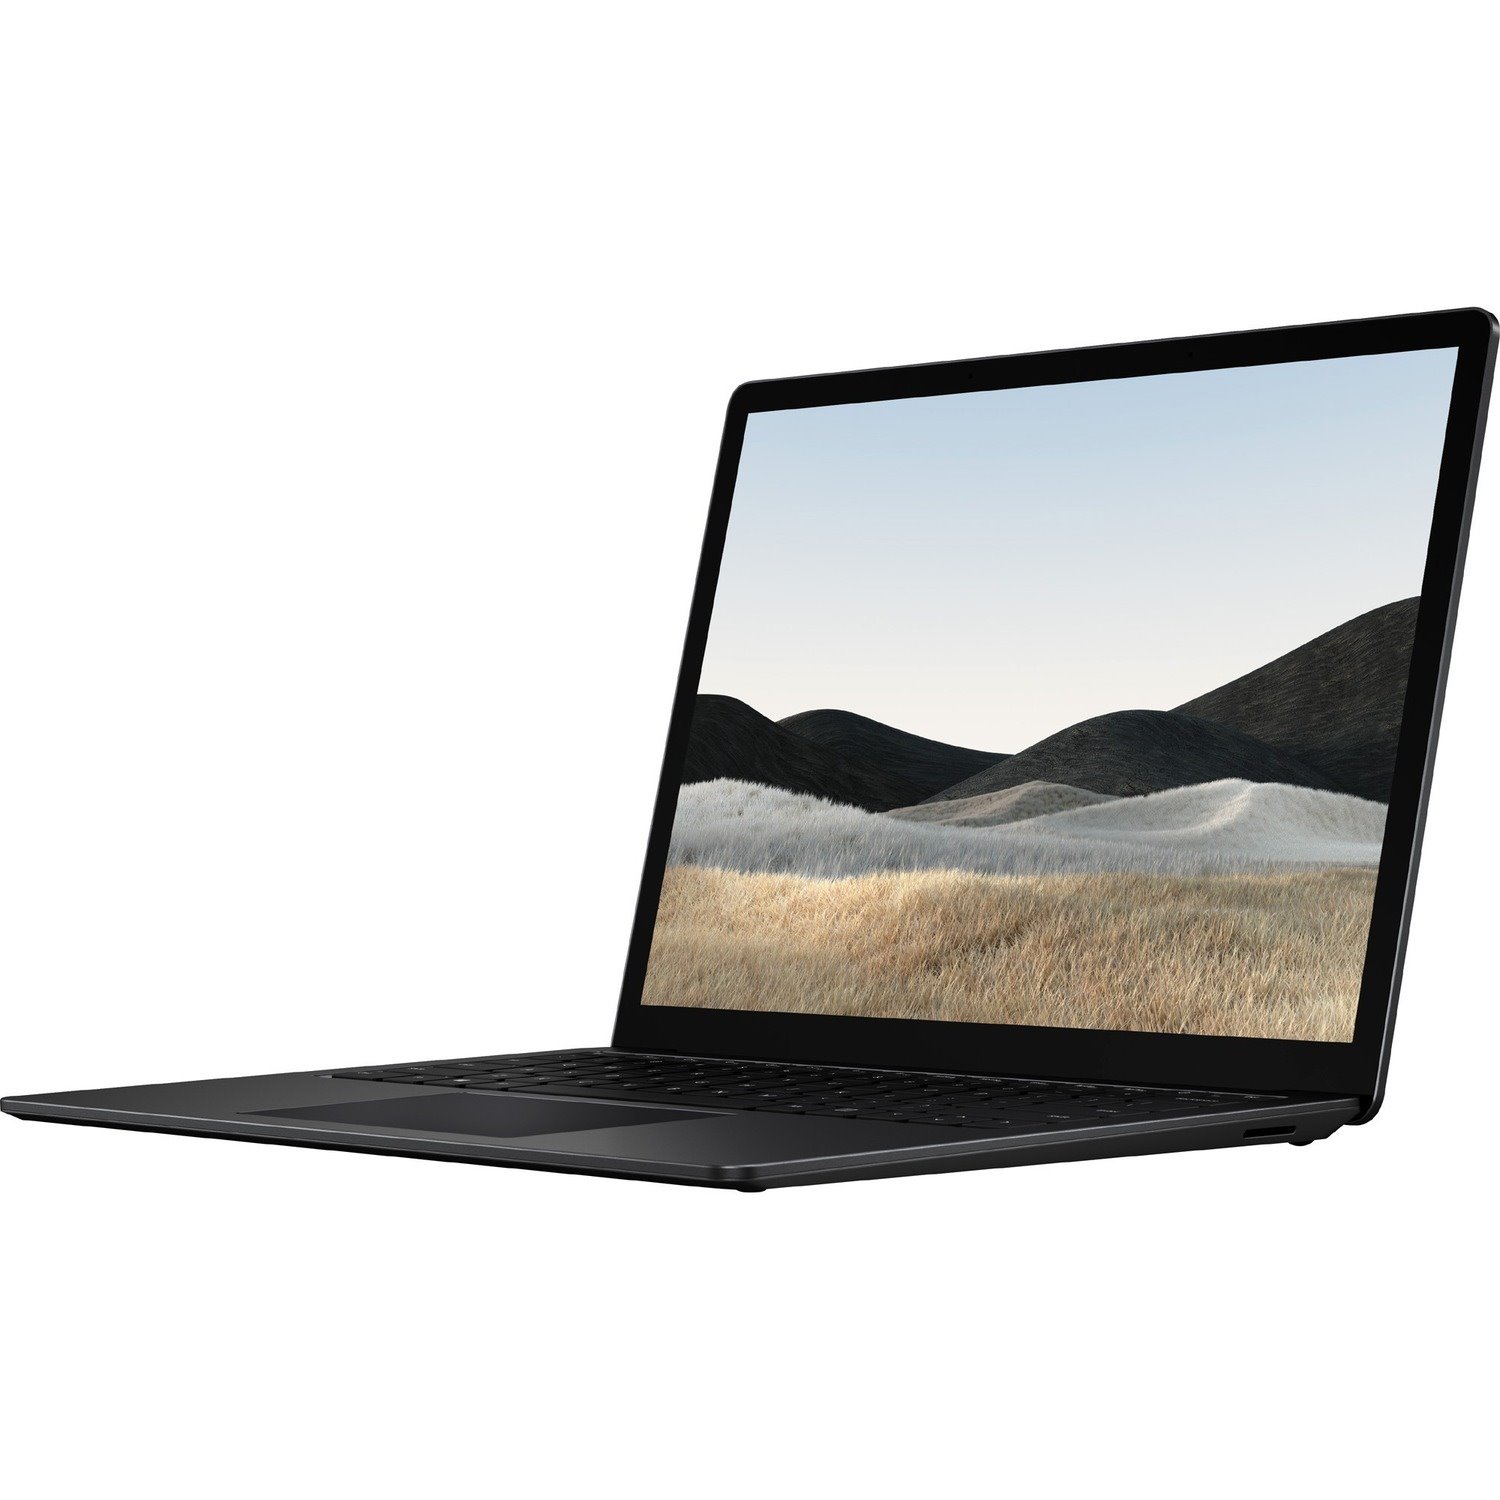 Microsoft Surface Laptop 4 34.3 cm (13.5") Touchscreen Notebook - 2256 x 1504 - Intel Core i5 11th Gen - 8 GB Total RAM - 256 GB SSD - Matte Black